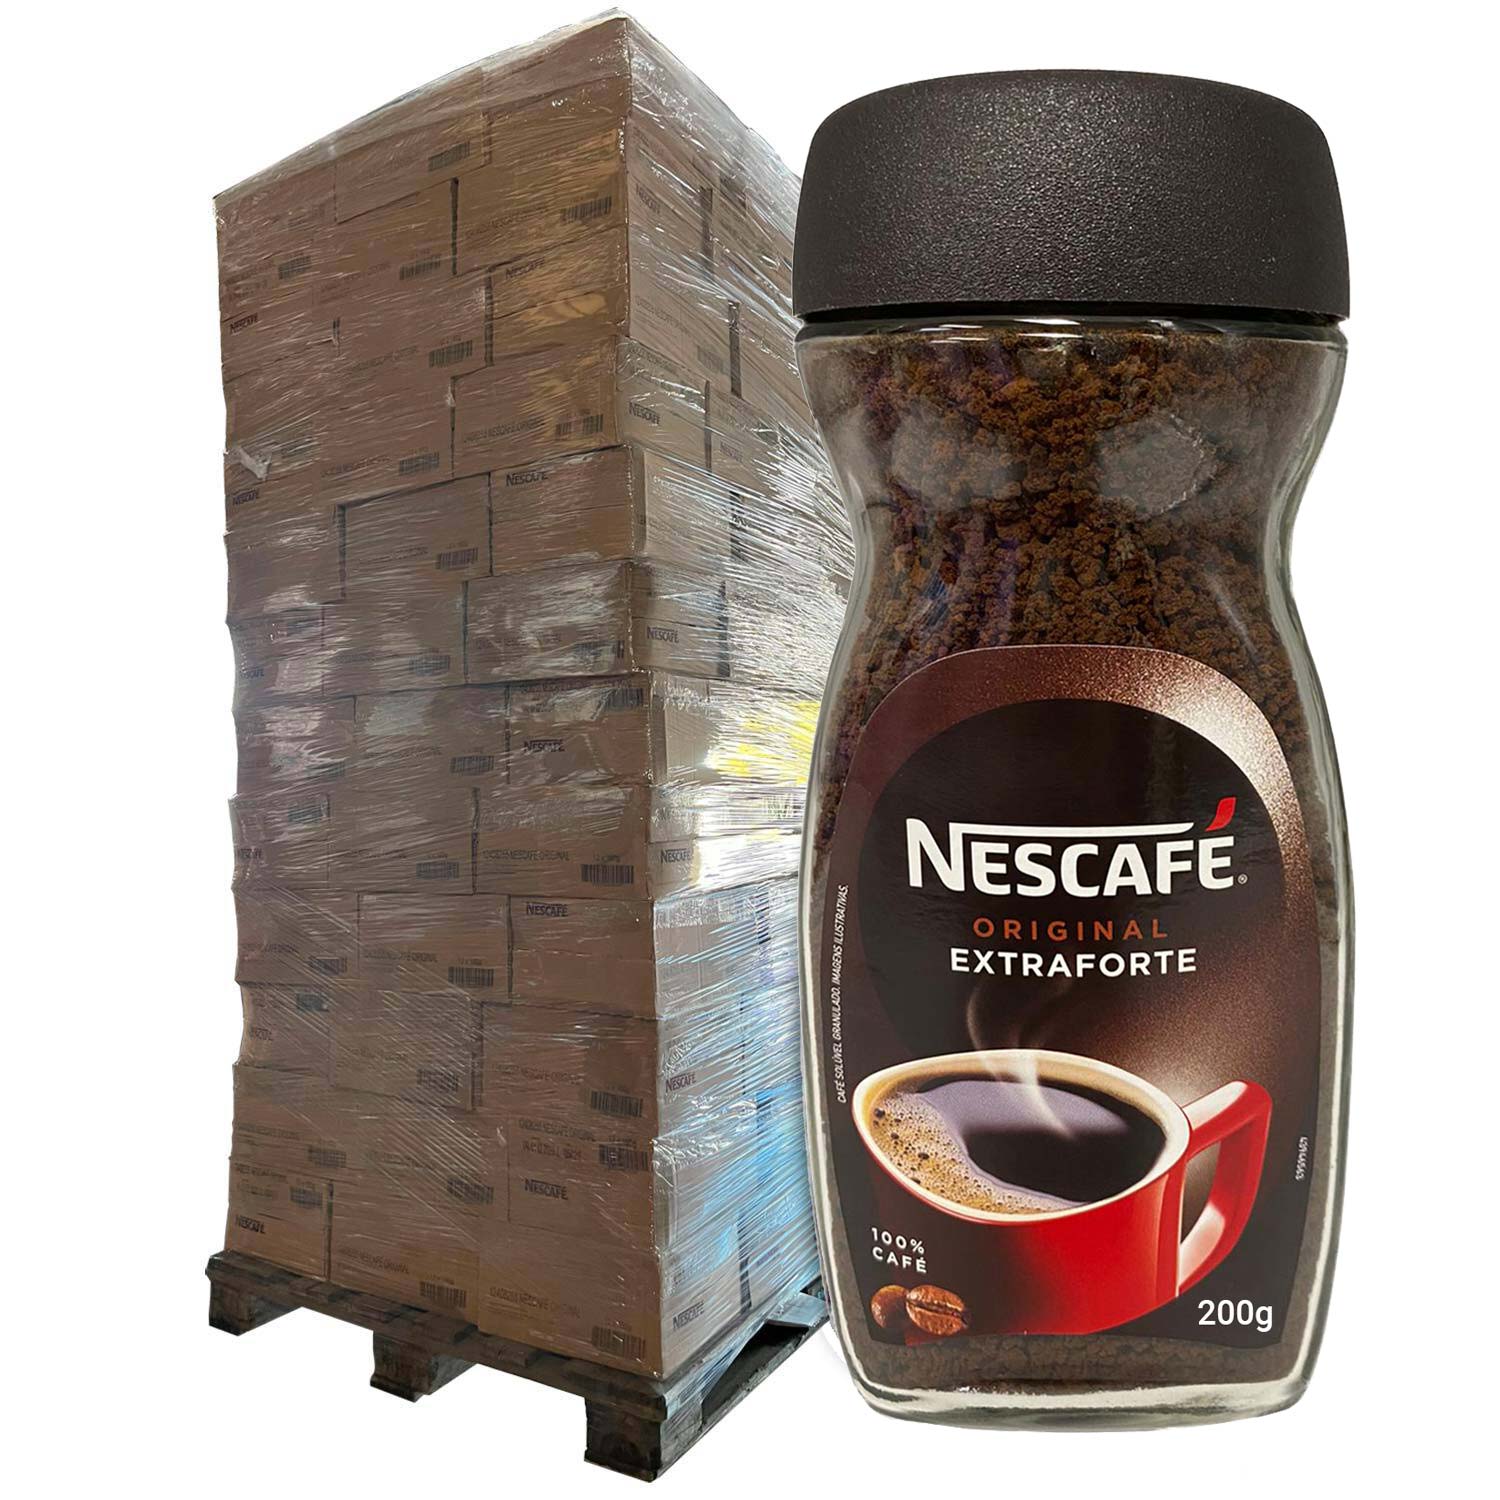 Nescafe 3 in 1 Regular Instant Coffee 48 Sticks